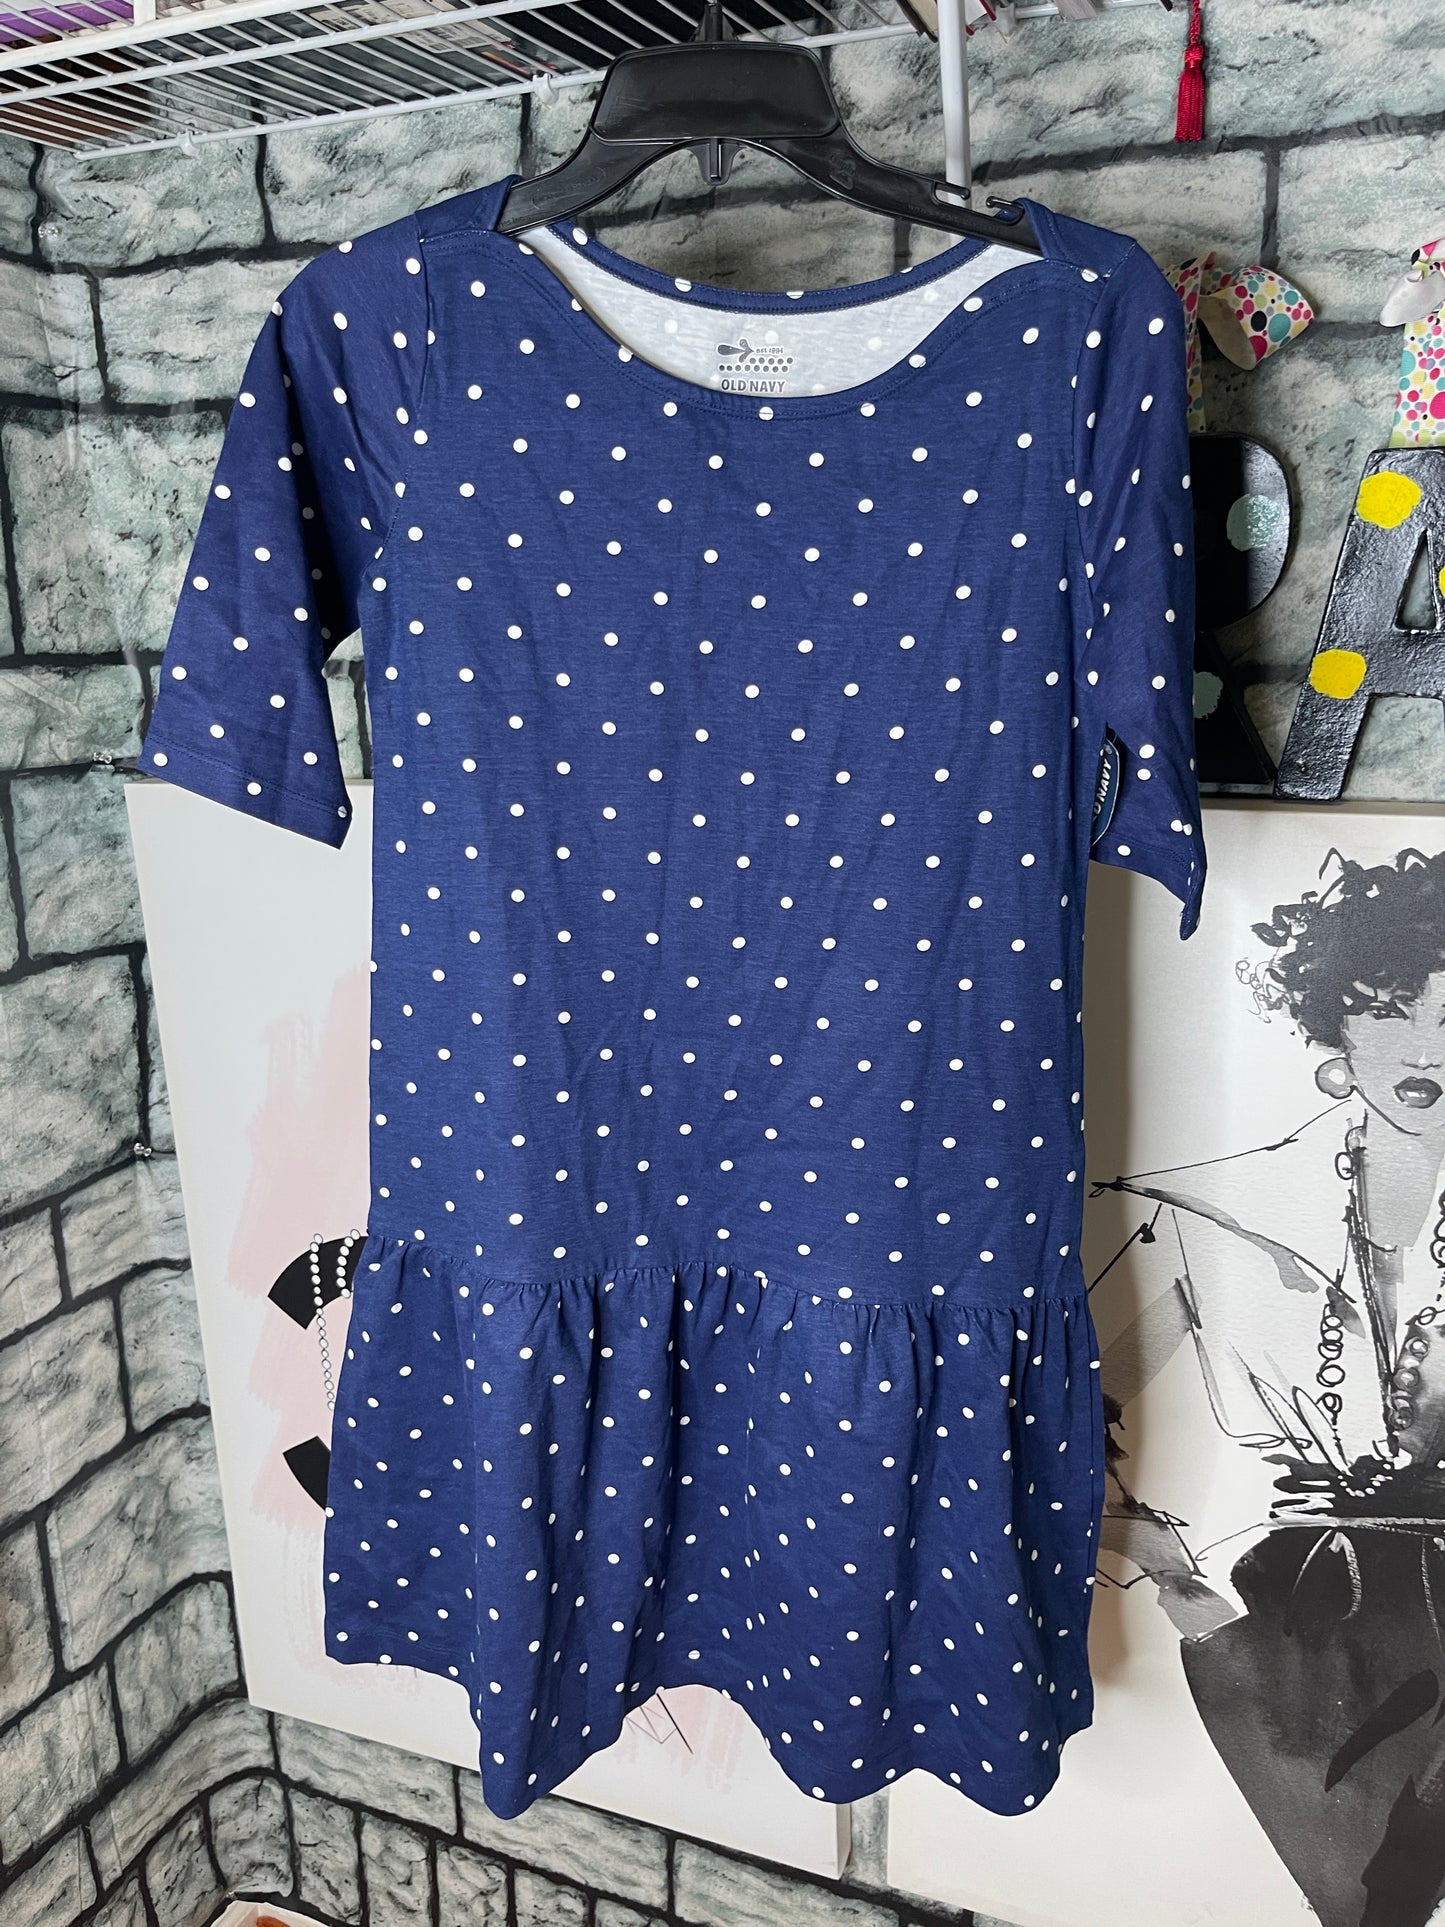 NEW Old Navy Blue Polka Dot Dress Girls sz XL 14